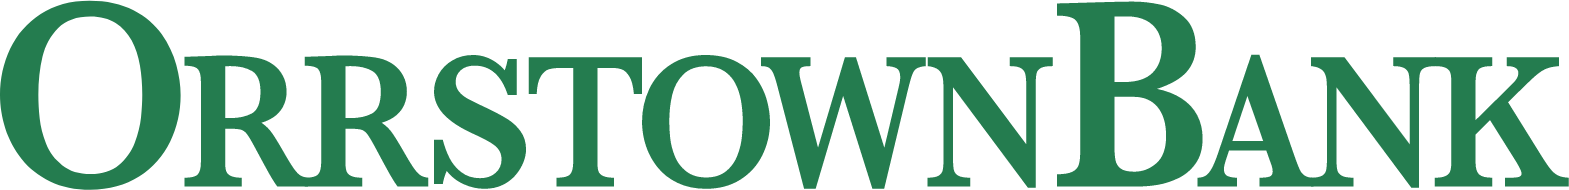 Orrstown Financial Services logo large (transparent PNG)